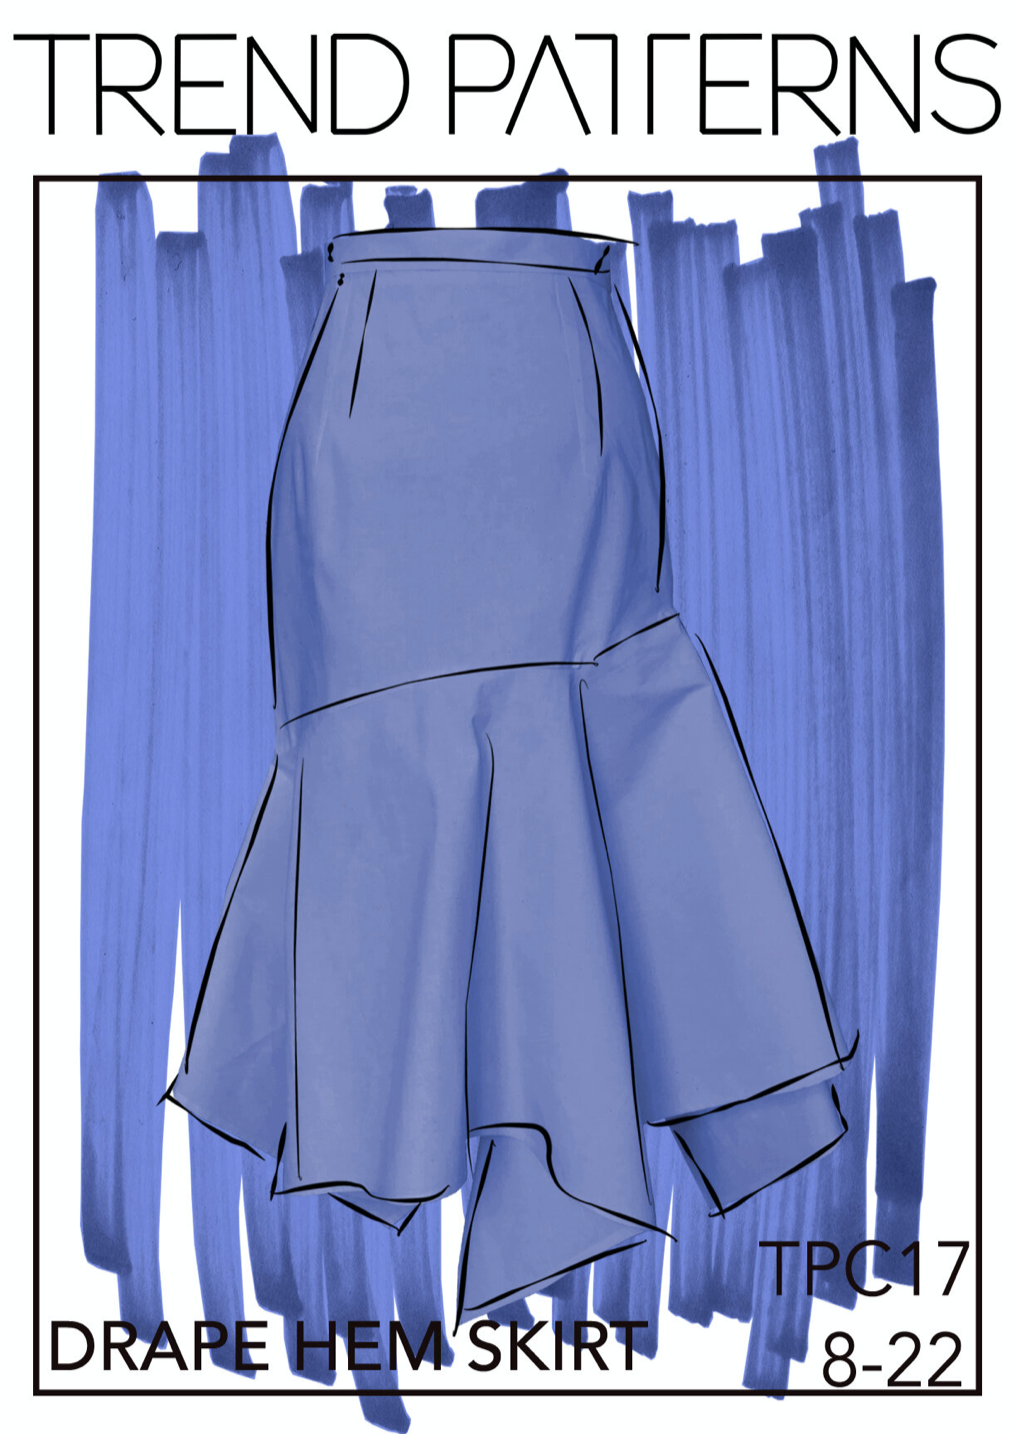 Trend Patterns TPC17 Drape Hem Skirt